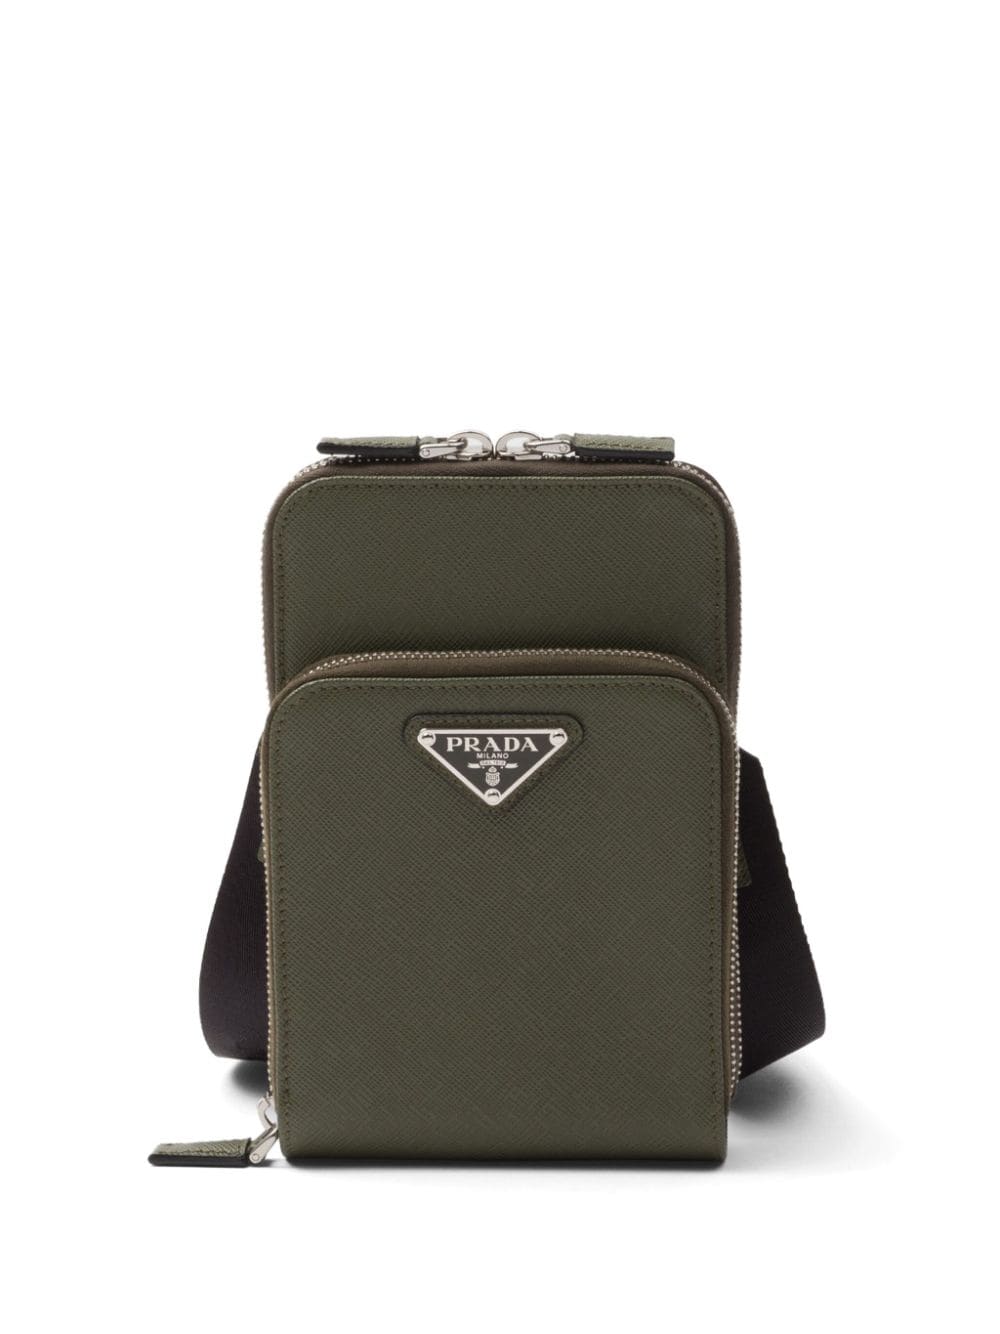 Prada Saffiano leather smartphone case - Green von Prada